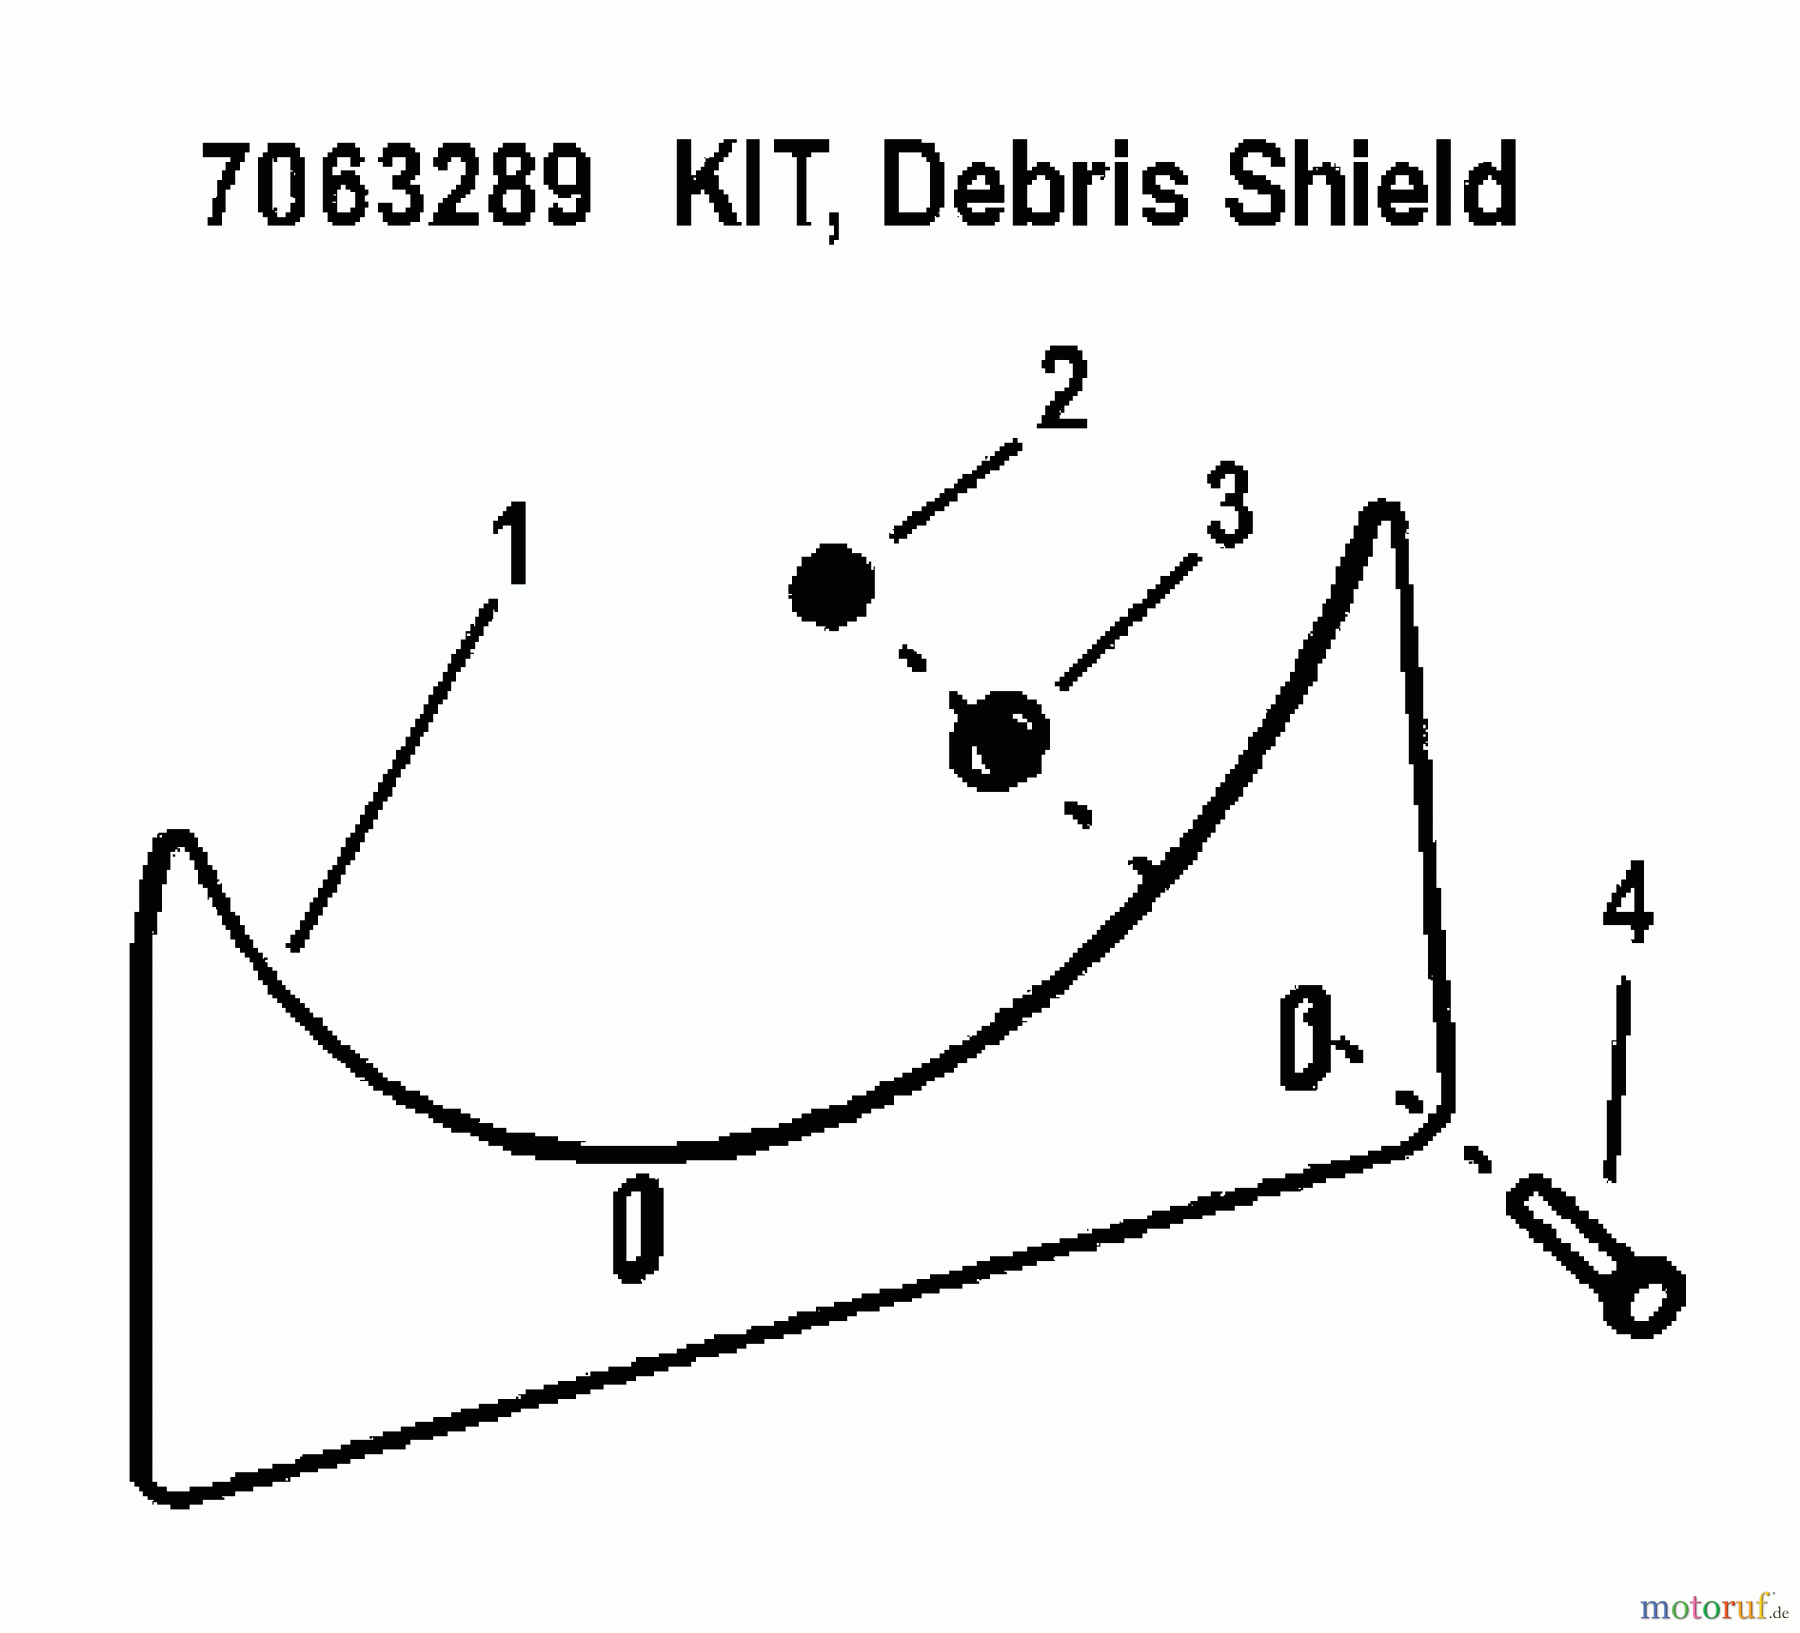  Snapper Zubehör. Rasenmäher 7063289 - Snapper Debris Shield, Single Bag Grass Catcher Kit KIT, DEBRIS SHIELD